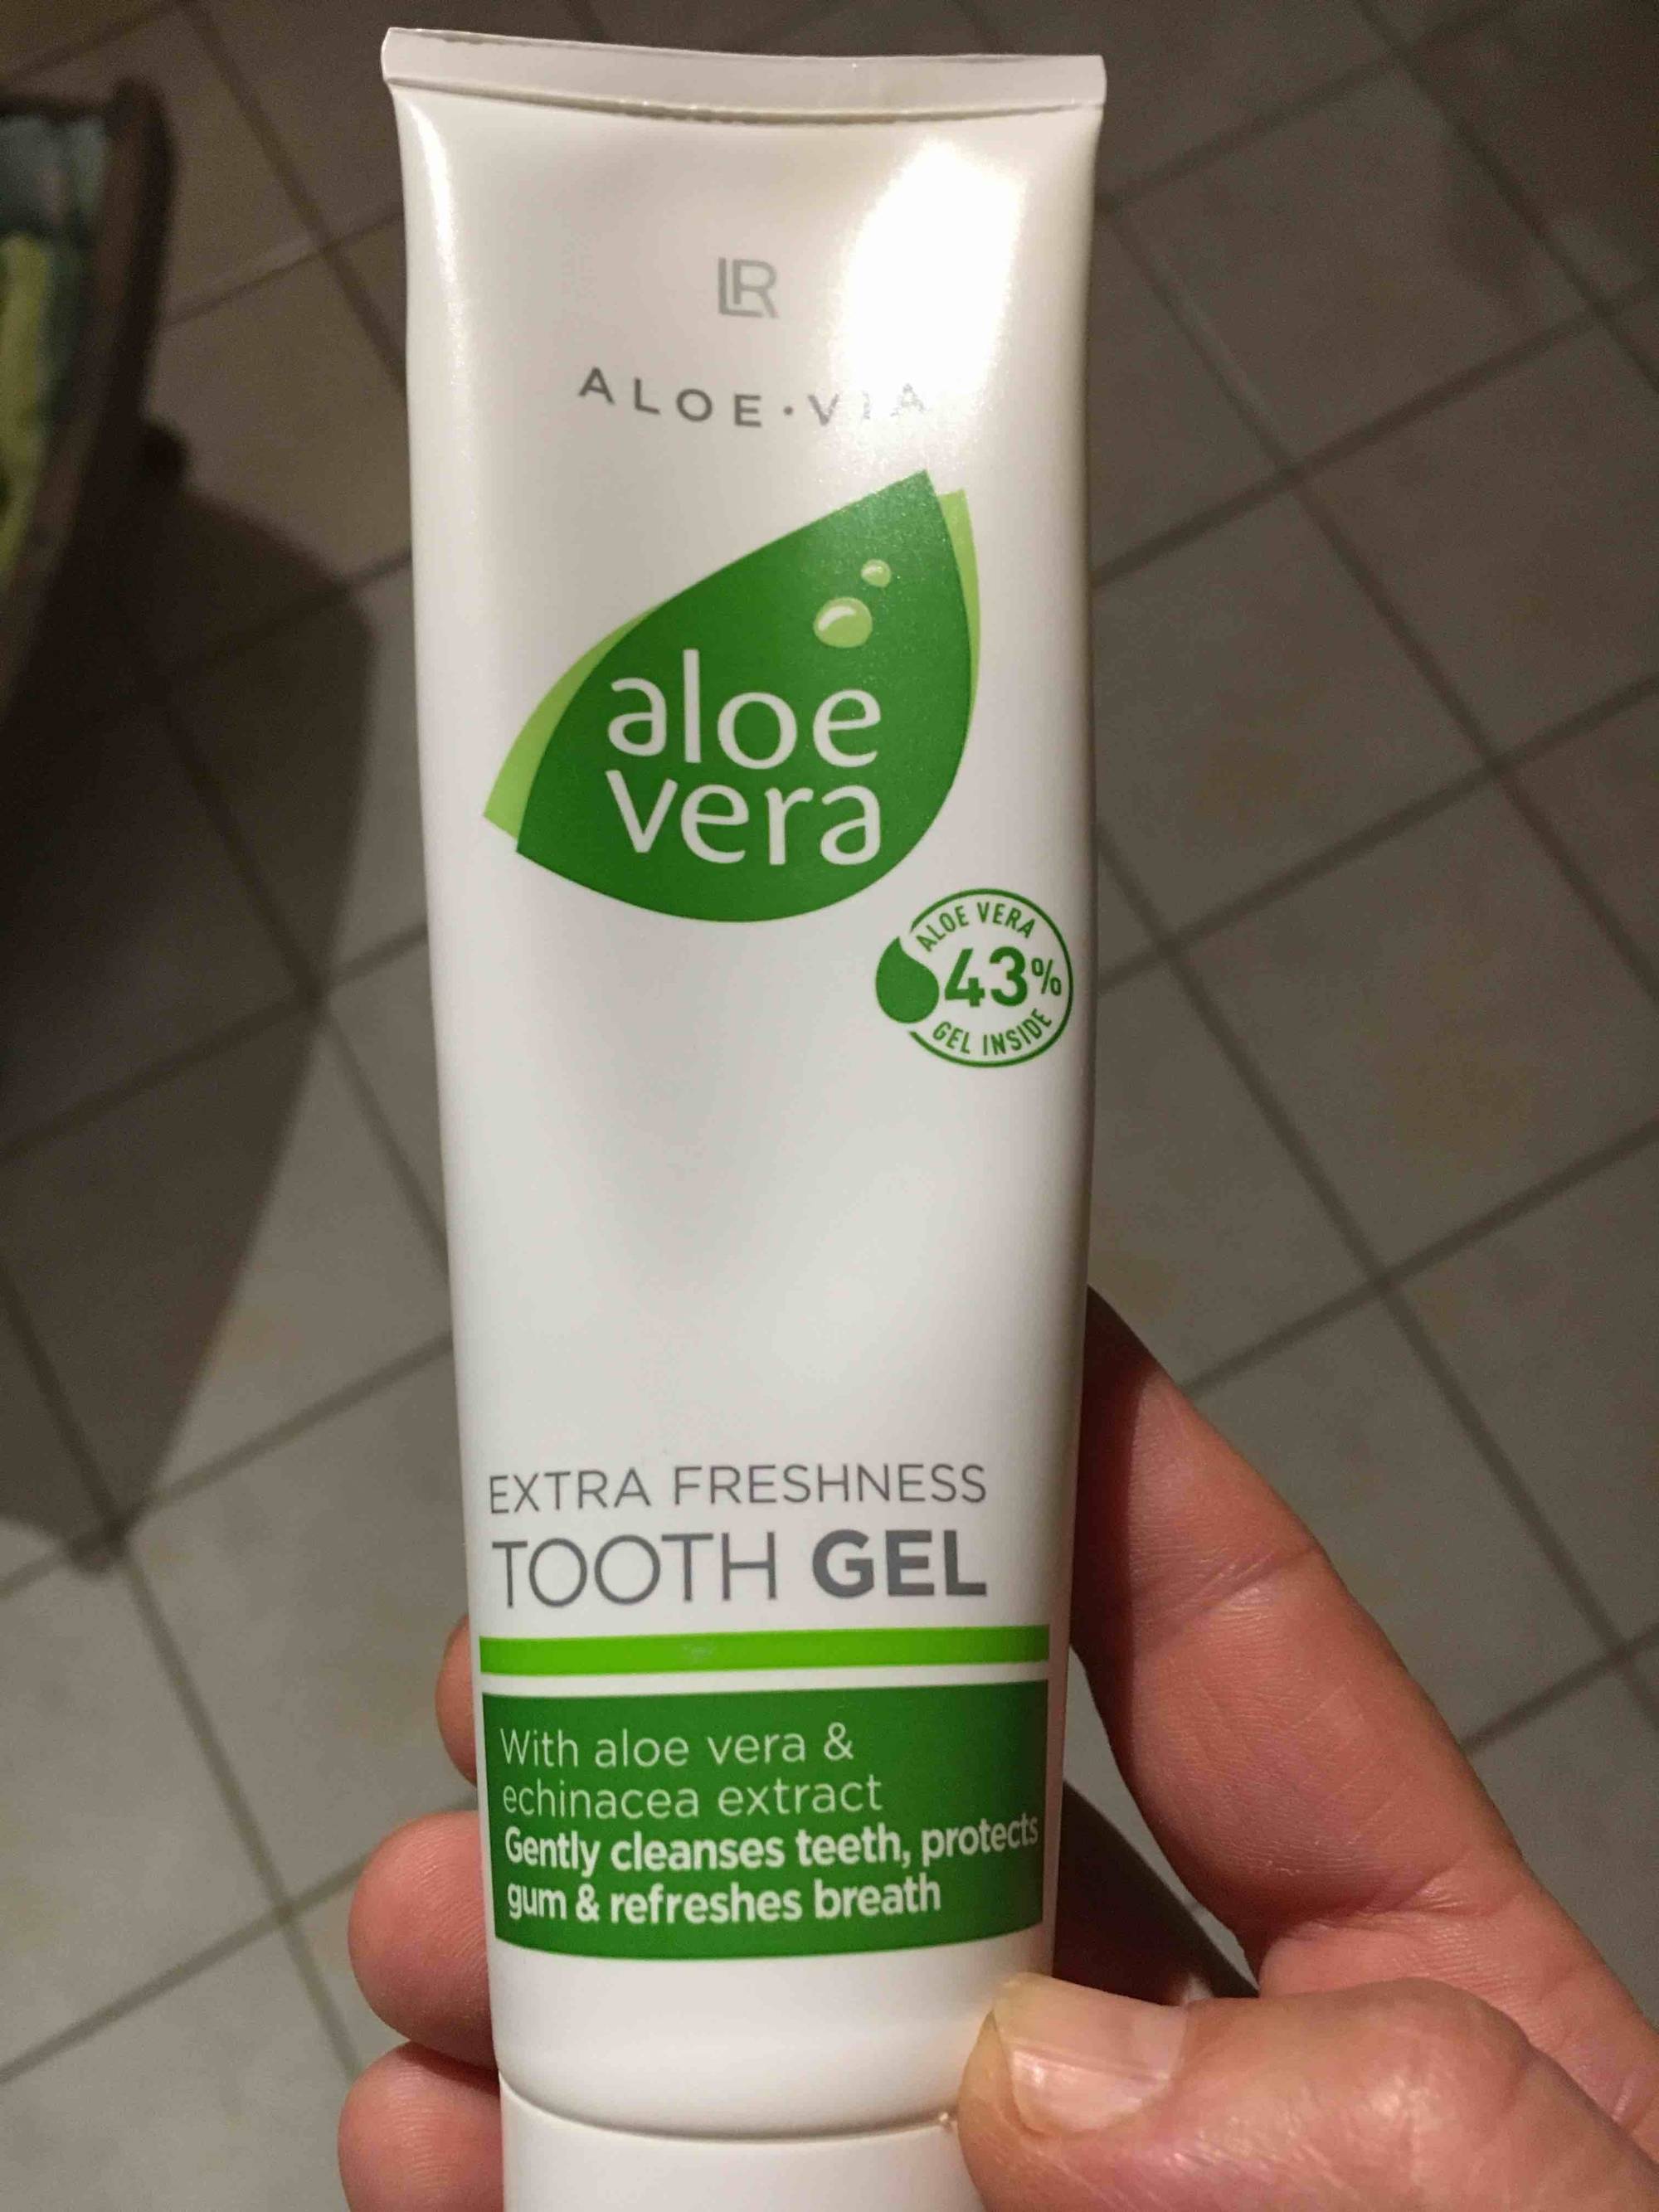 LR - Aloe vera - Extra freshness Tooth gel